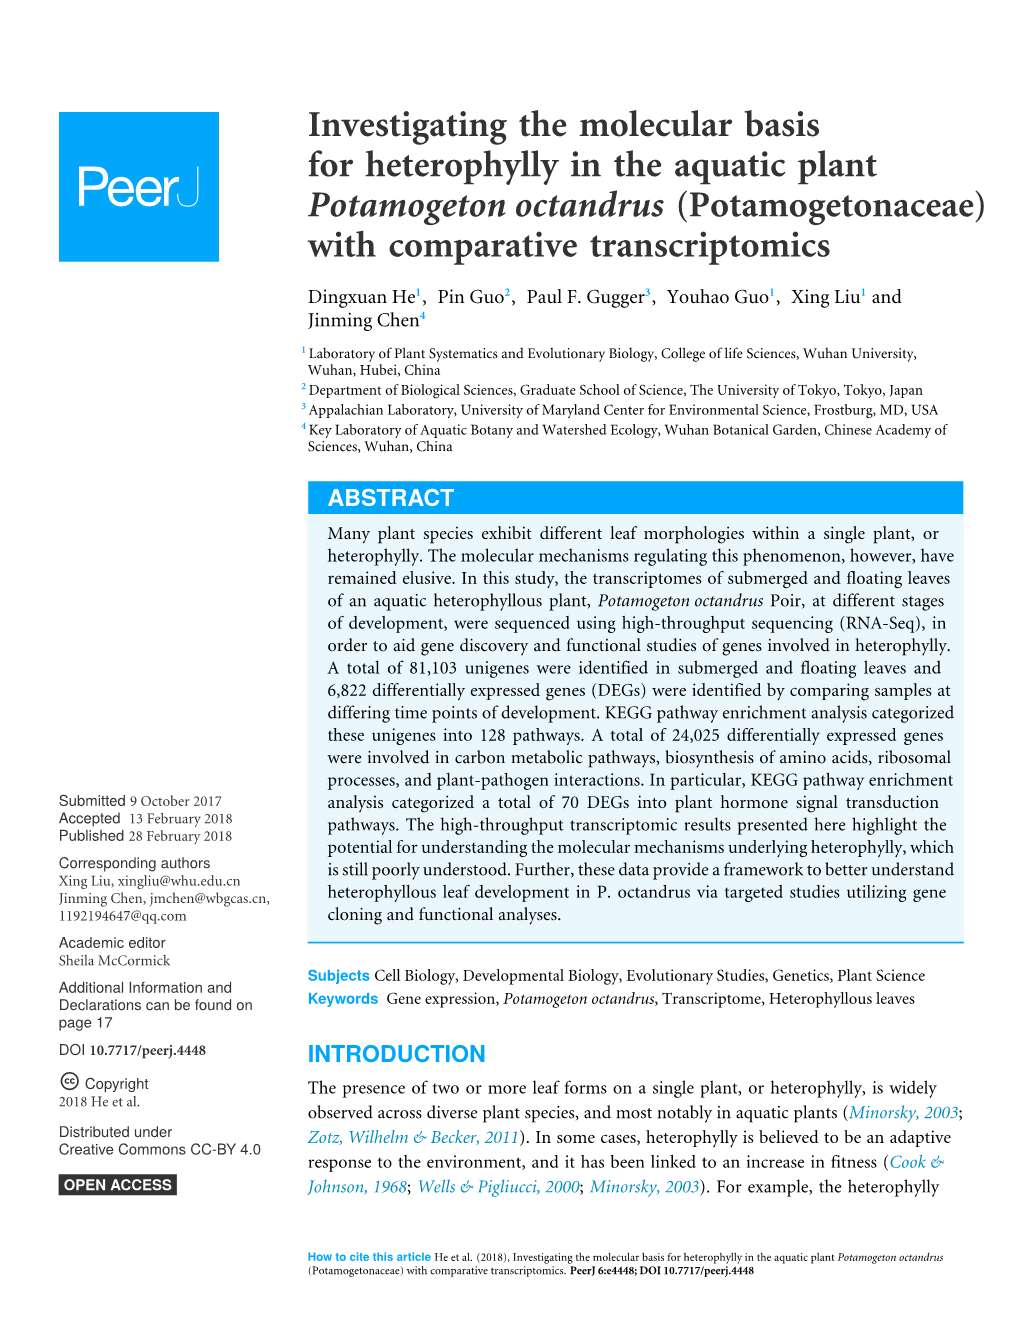 Investigating the Molecular Basis for Heterophylly in the Aquatic Plant Potamogeton Octandrus (Potamogetonaceae) with Comparative Transcriptomics